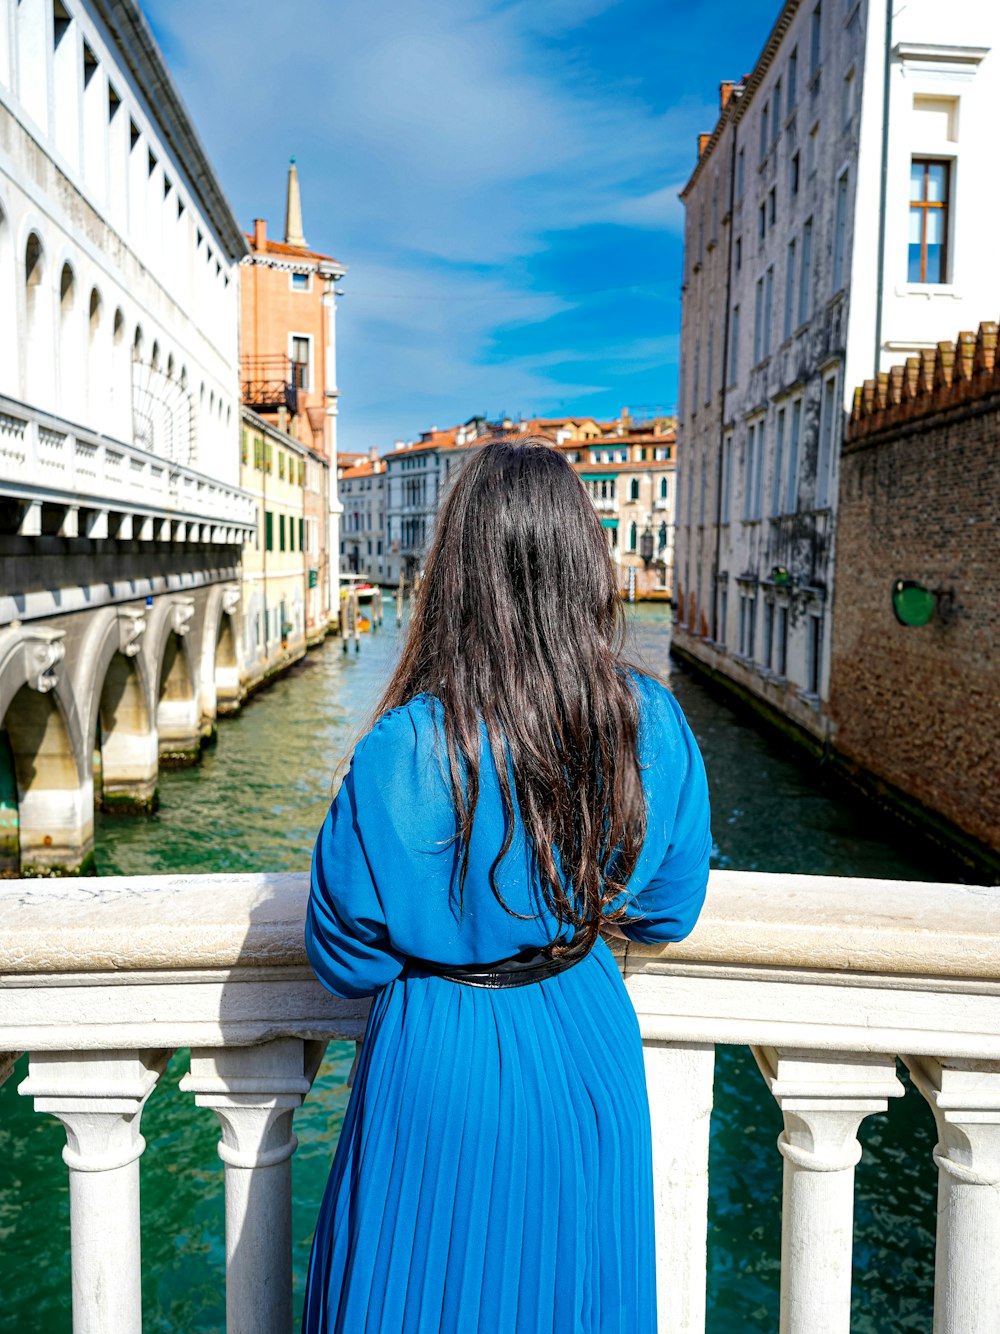 a woman in a blue dress standing on a bridge